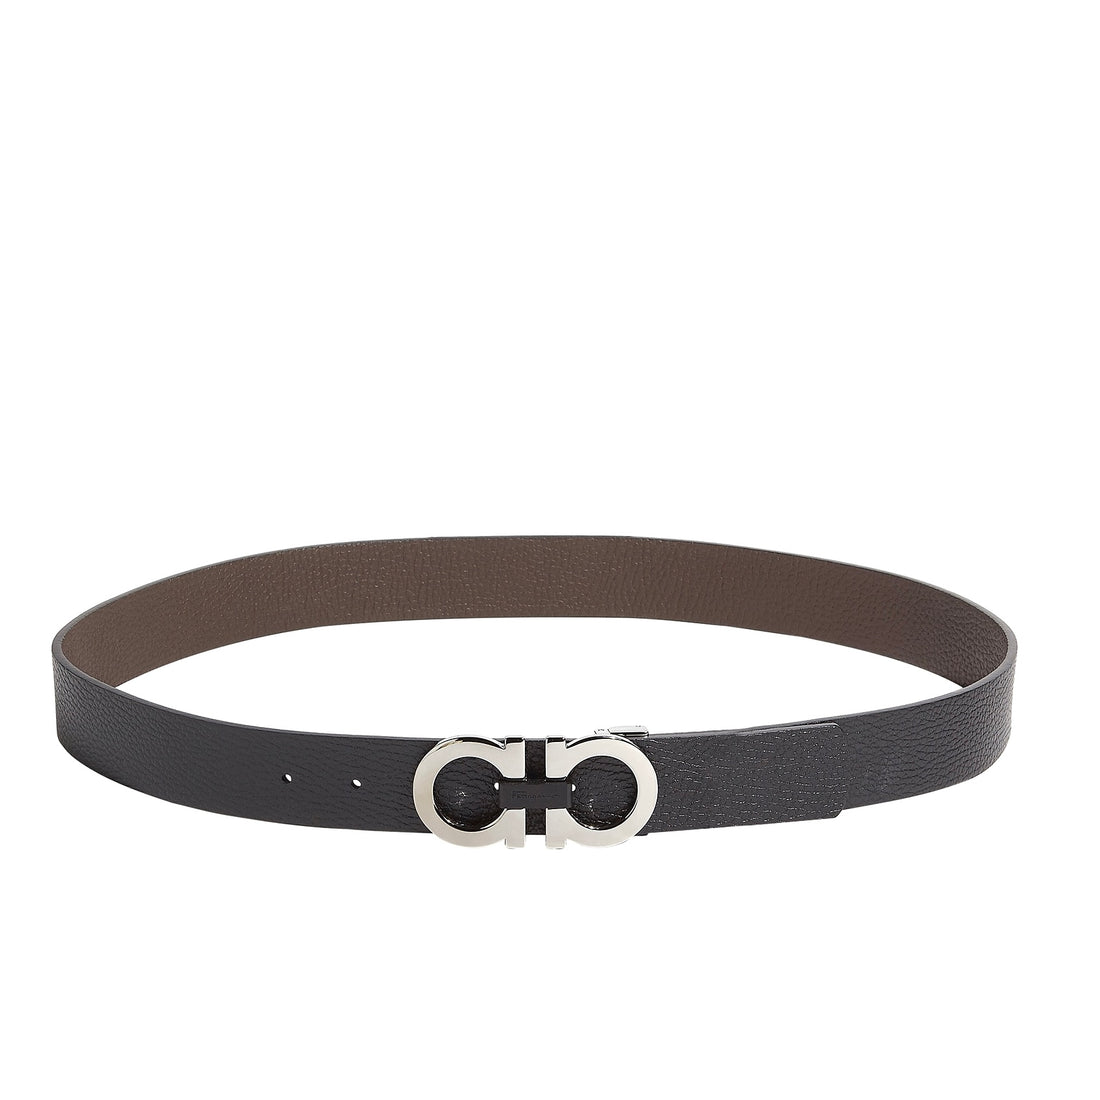 Ferragamo Black/Brown Pebble Leather Adjustable Belt